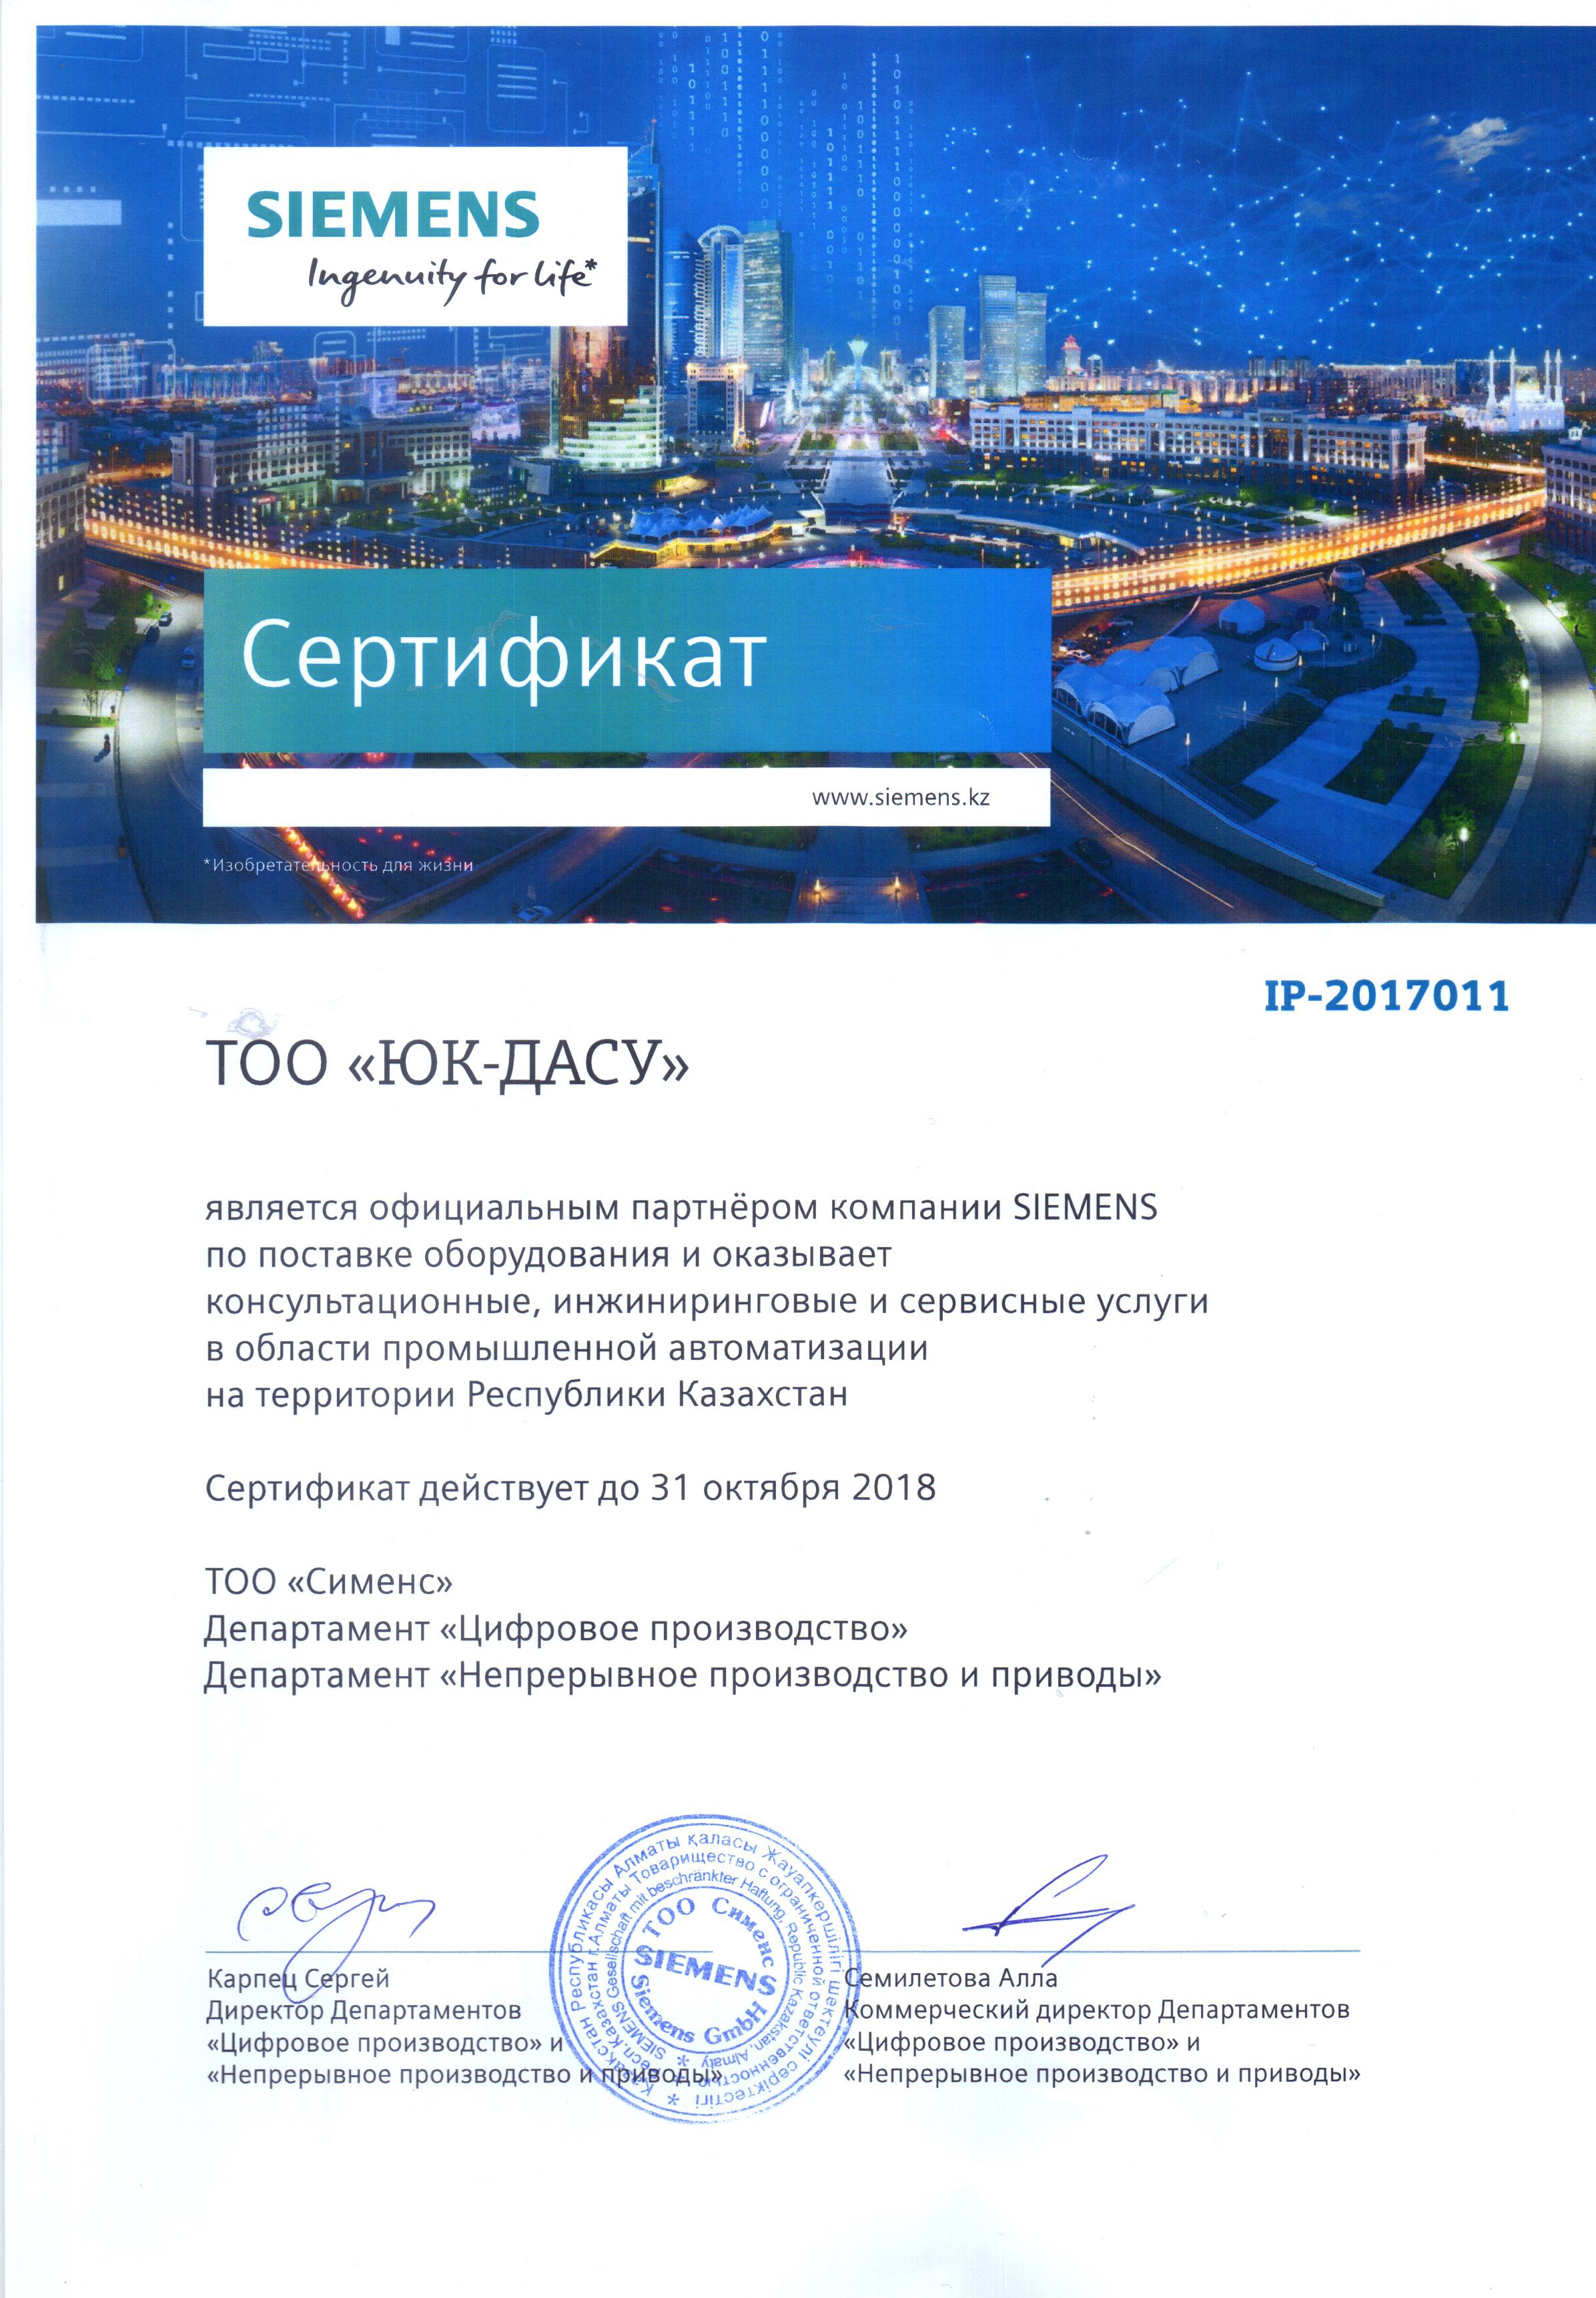 Сертификат от Siemens 2018 г.